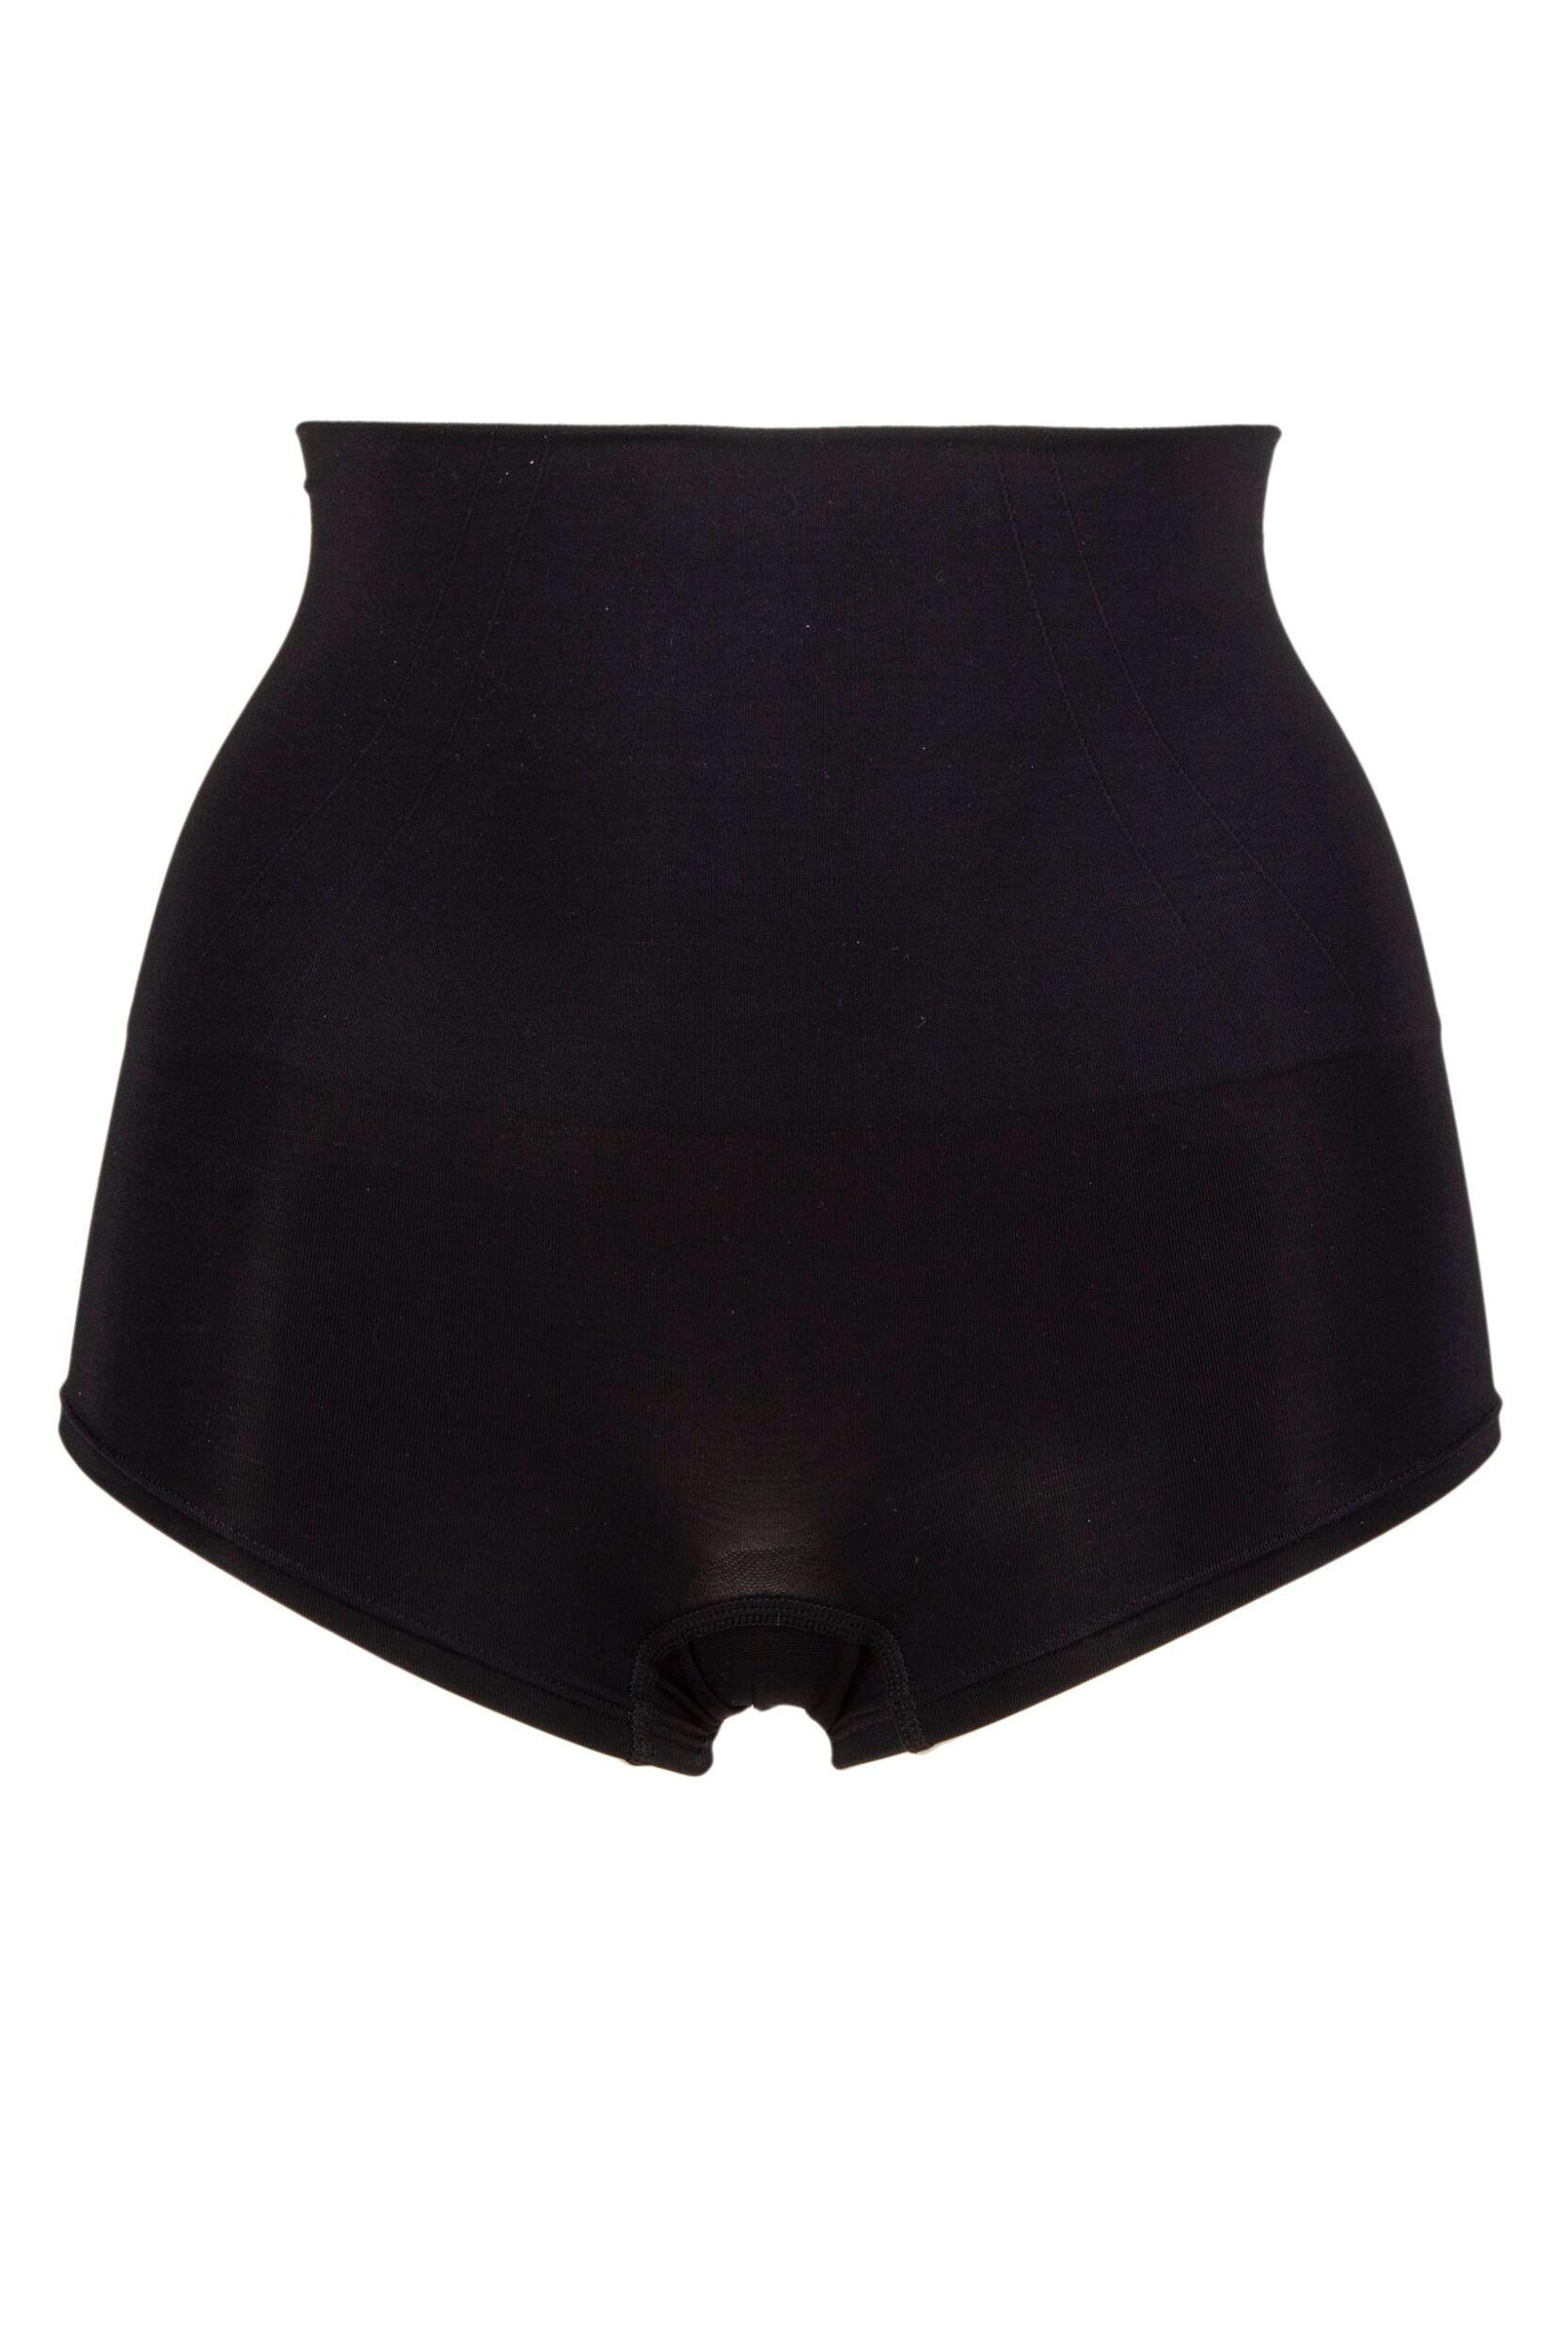 Ladies 1 Pack Ambra Power Lite Boyleg Brief Underwear Black UK 8-10